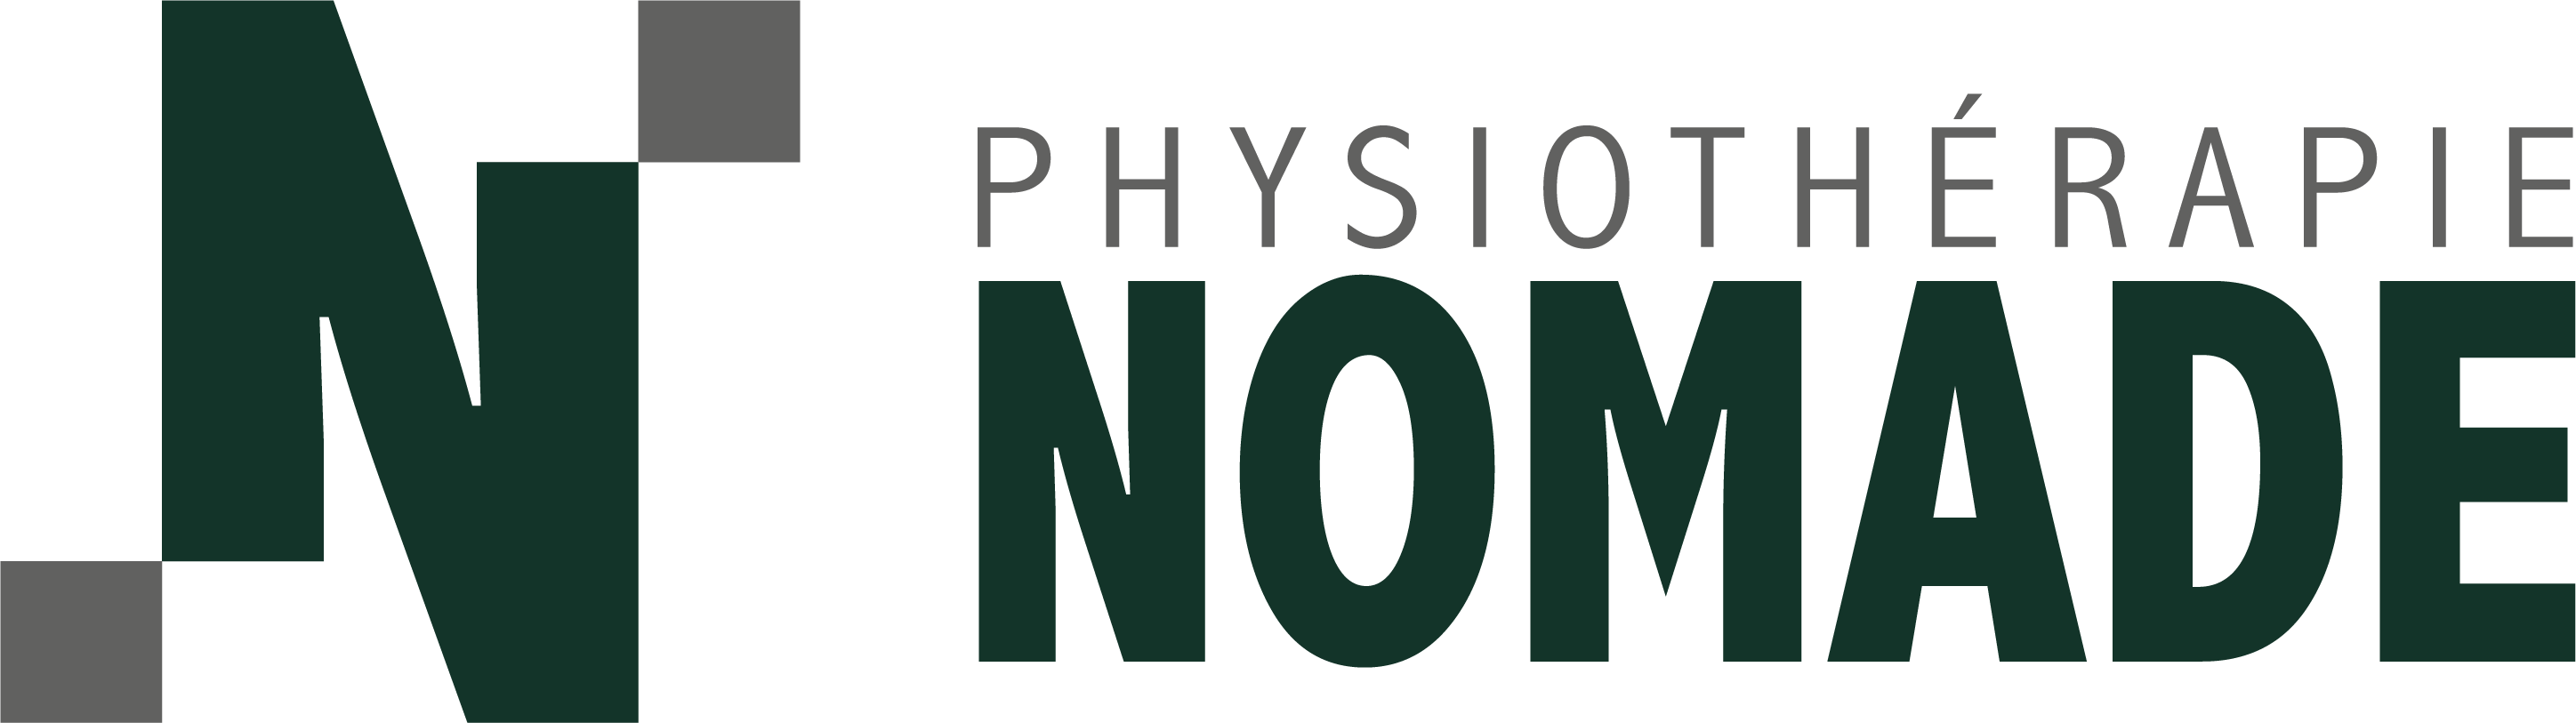 Physiothérapie Nomade